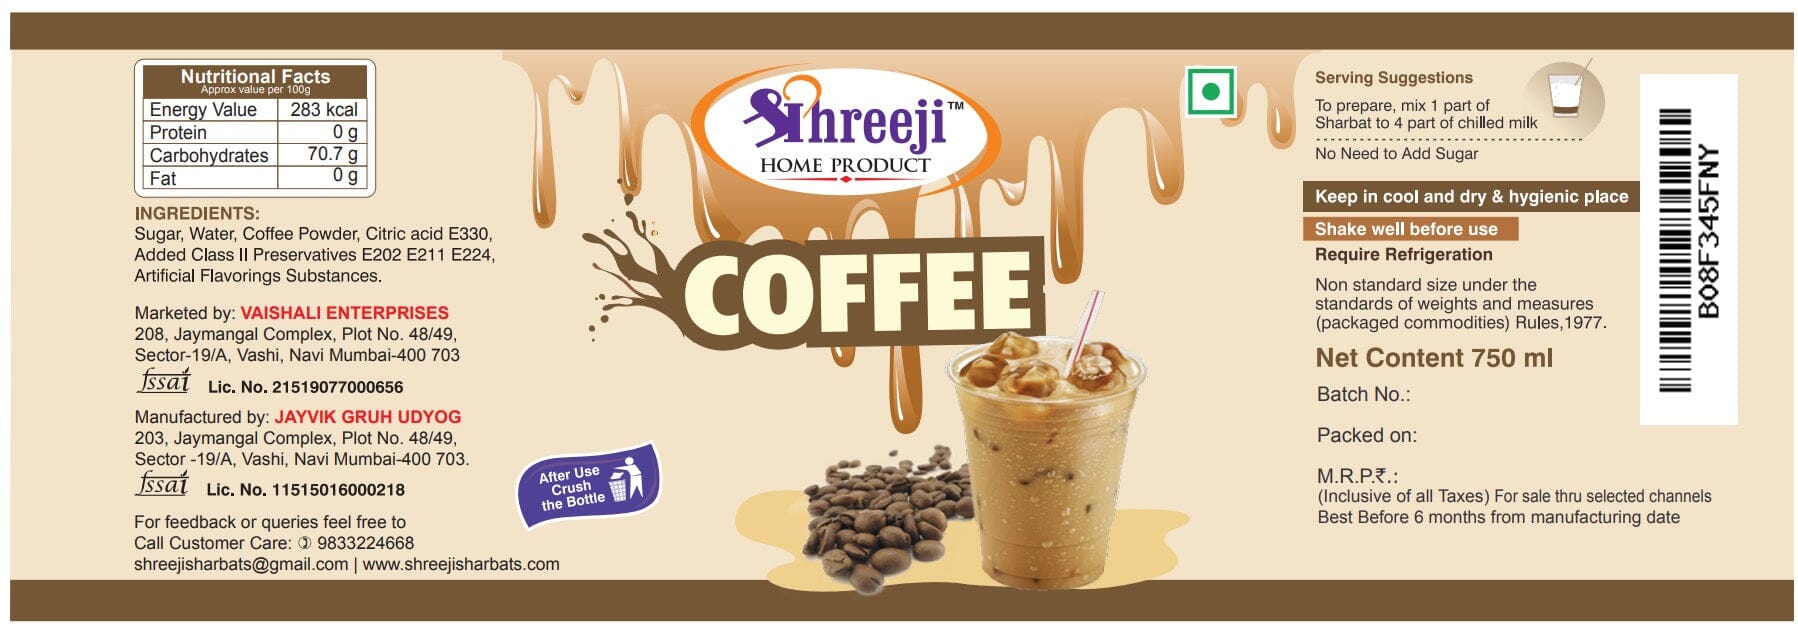 Shreeji Coffe Syrup Mix with Milk for Making Juice 750 ml Syrup Shreeji